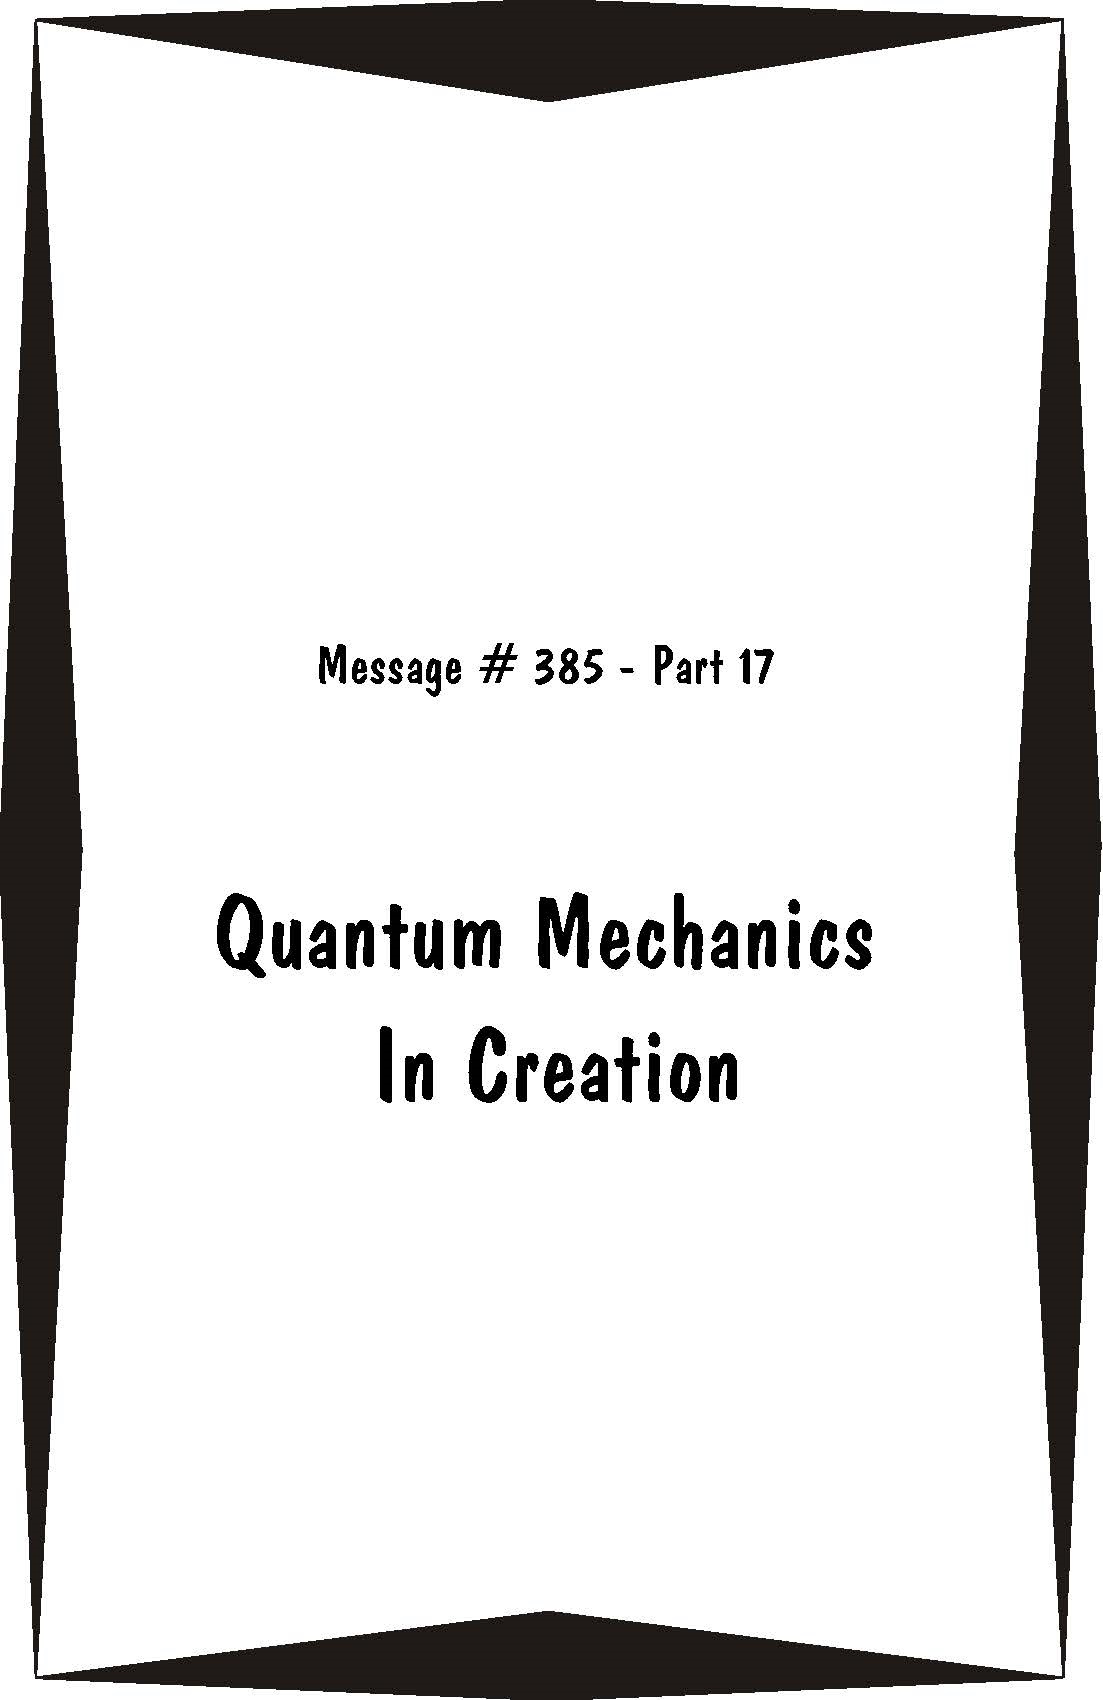 QuantumMechanicsInCreation.LEM.385.17.Cover.040816.72dpi